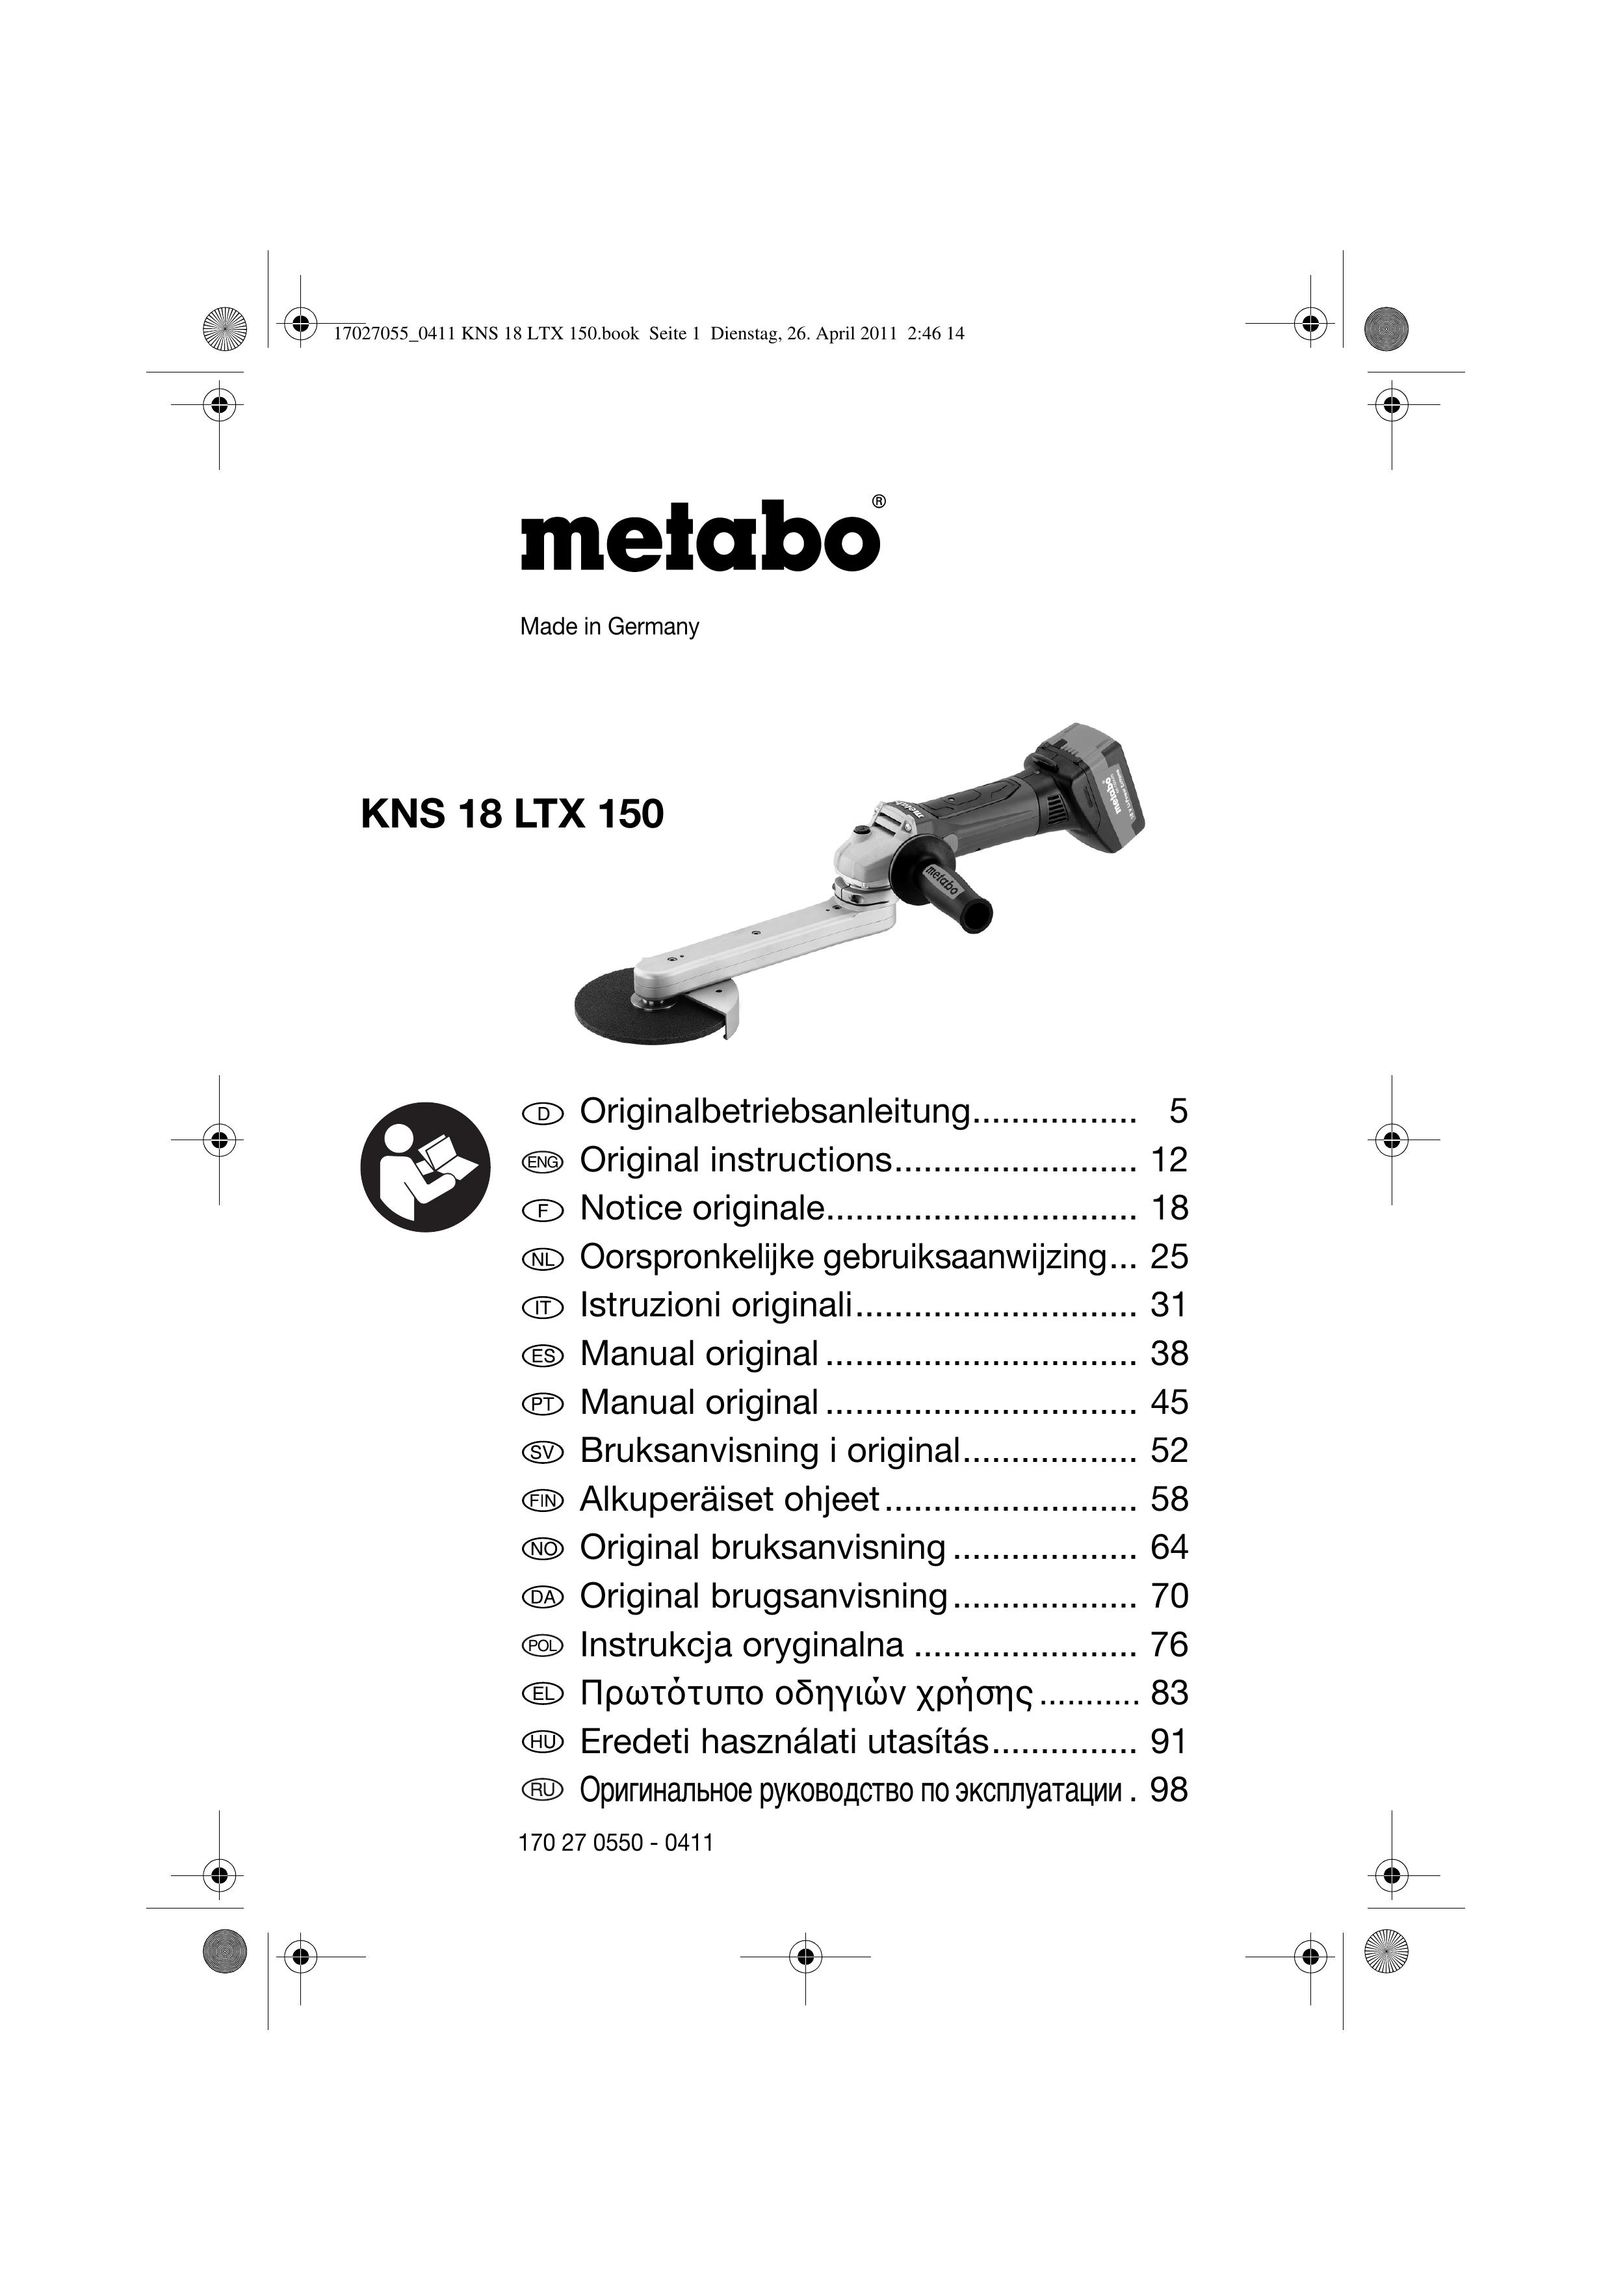 Metabo KNS 18 LTX 150 BARE Grinder User Manual